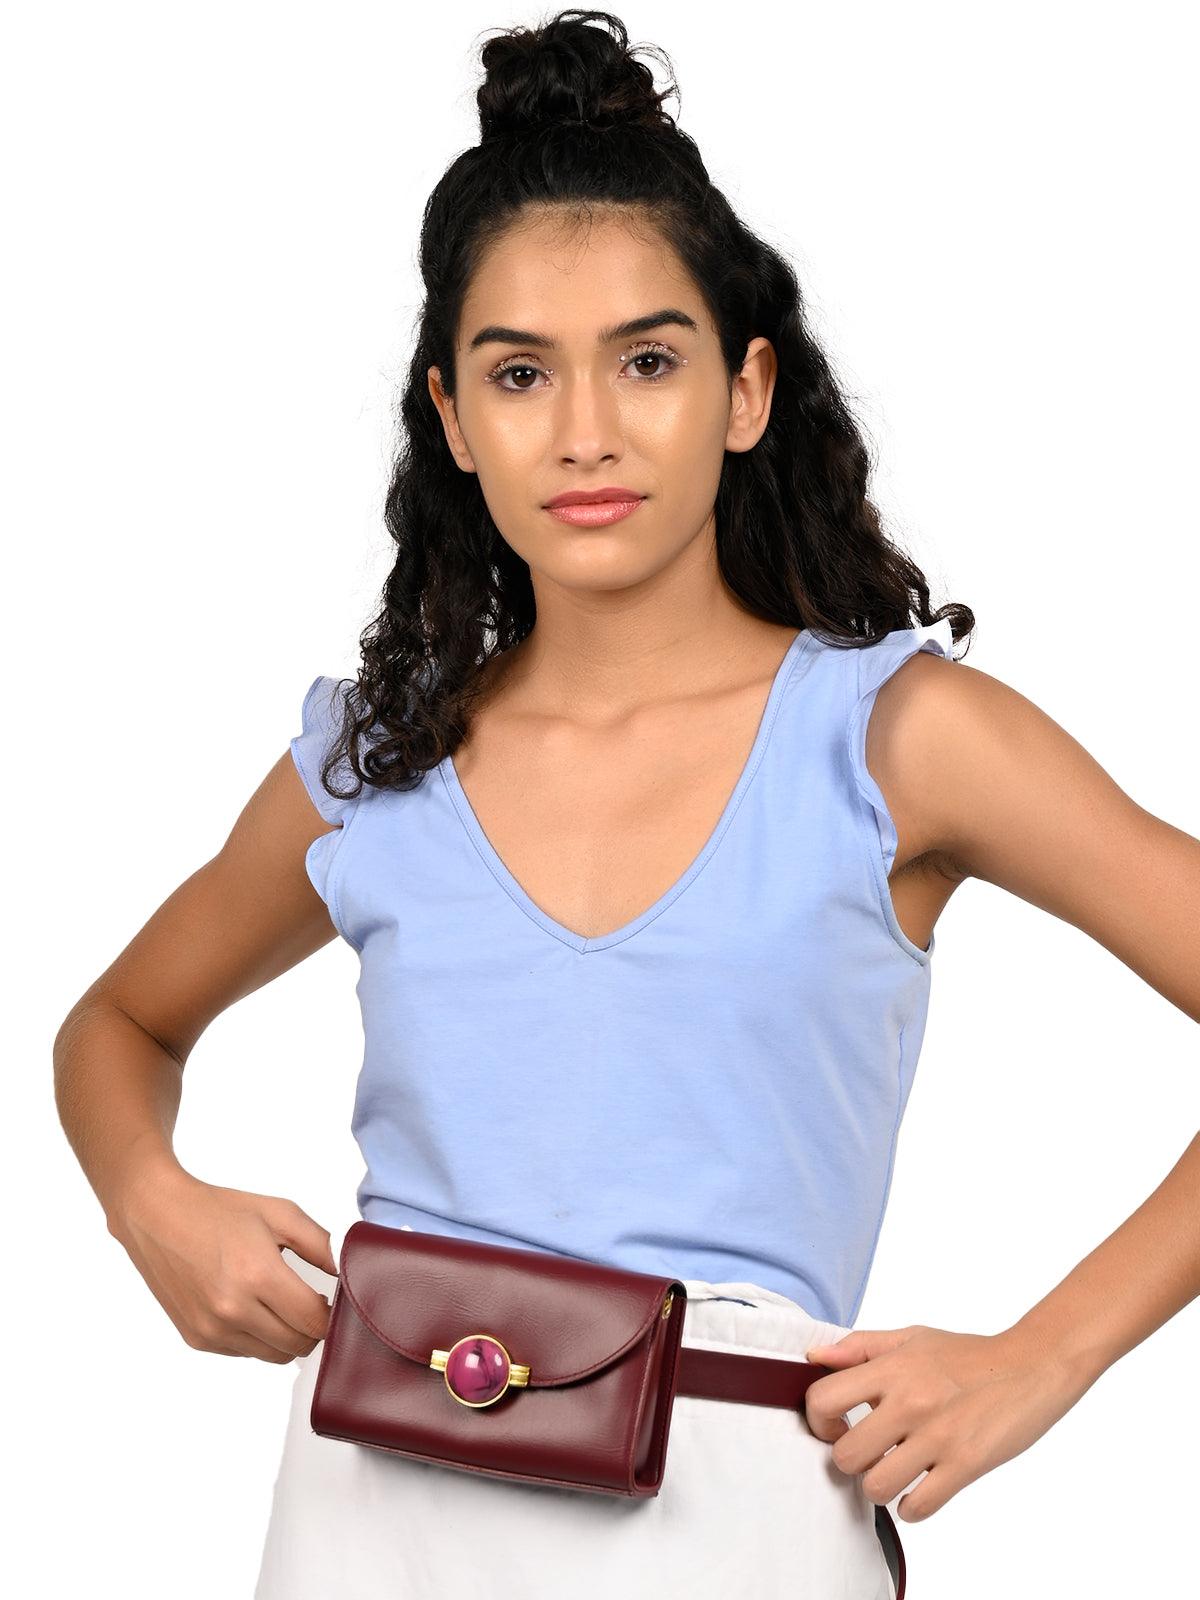 Deep maroon gorgeous smooth texture belt bag for women - Odette